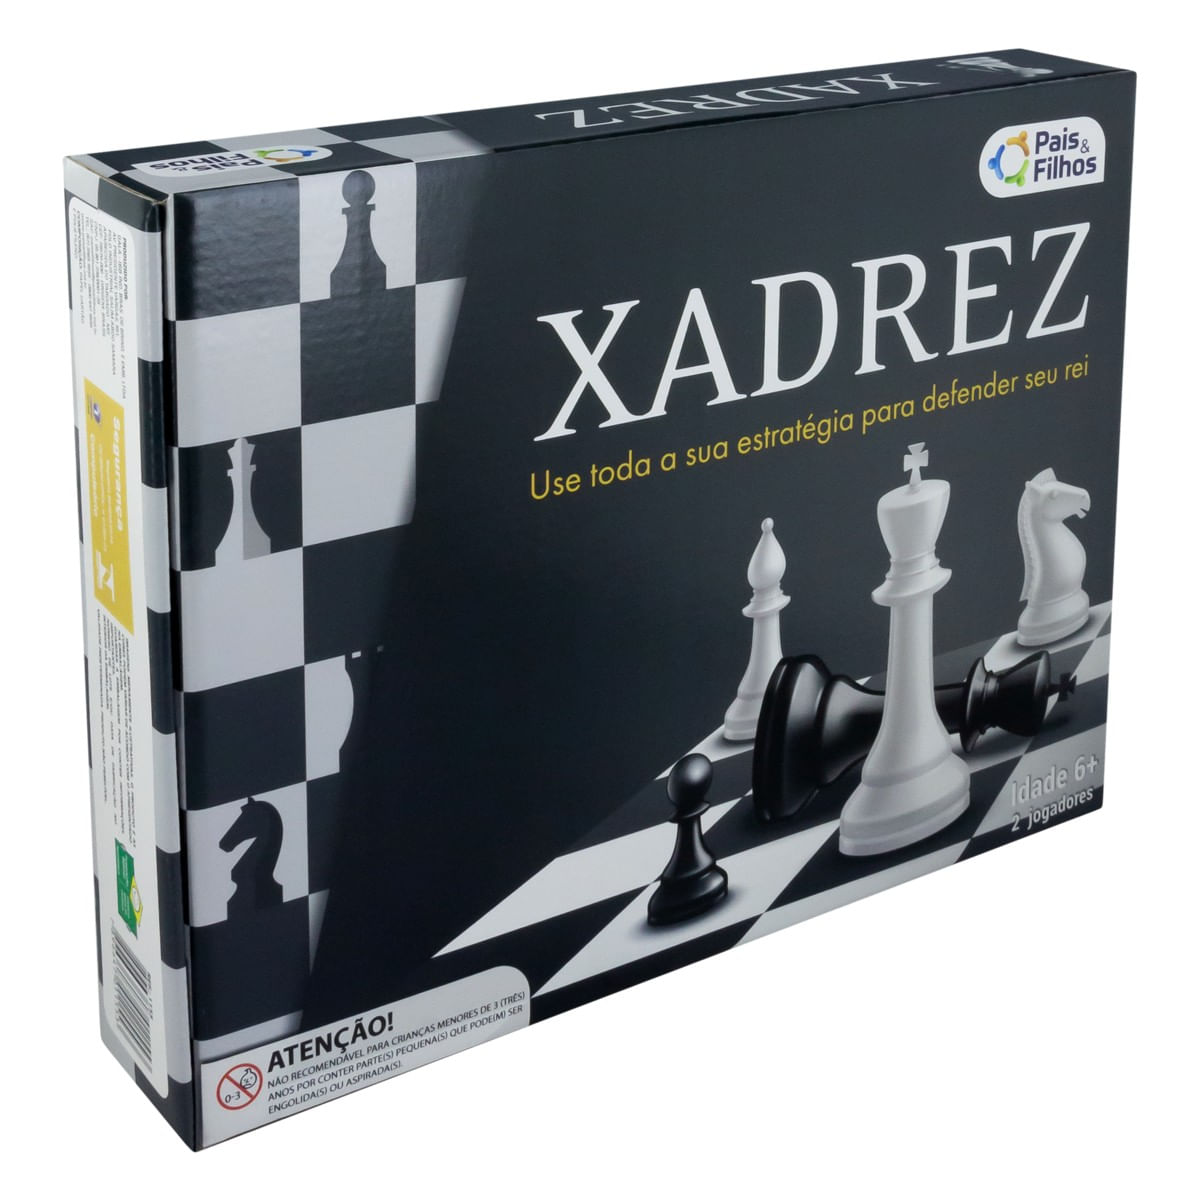 Caneca Chess Player Tabuleiro Peças Jogo Xadrez Xeque-Mate